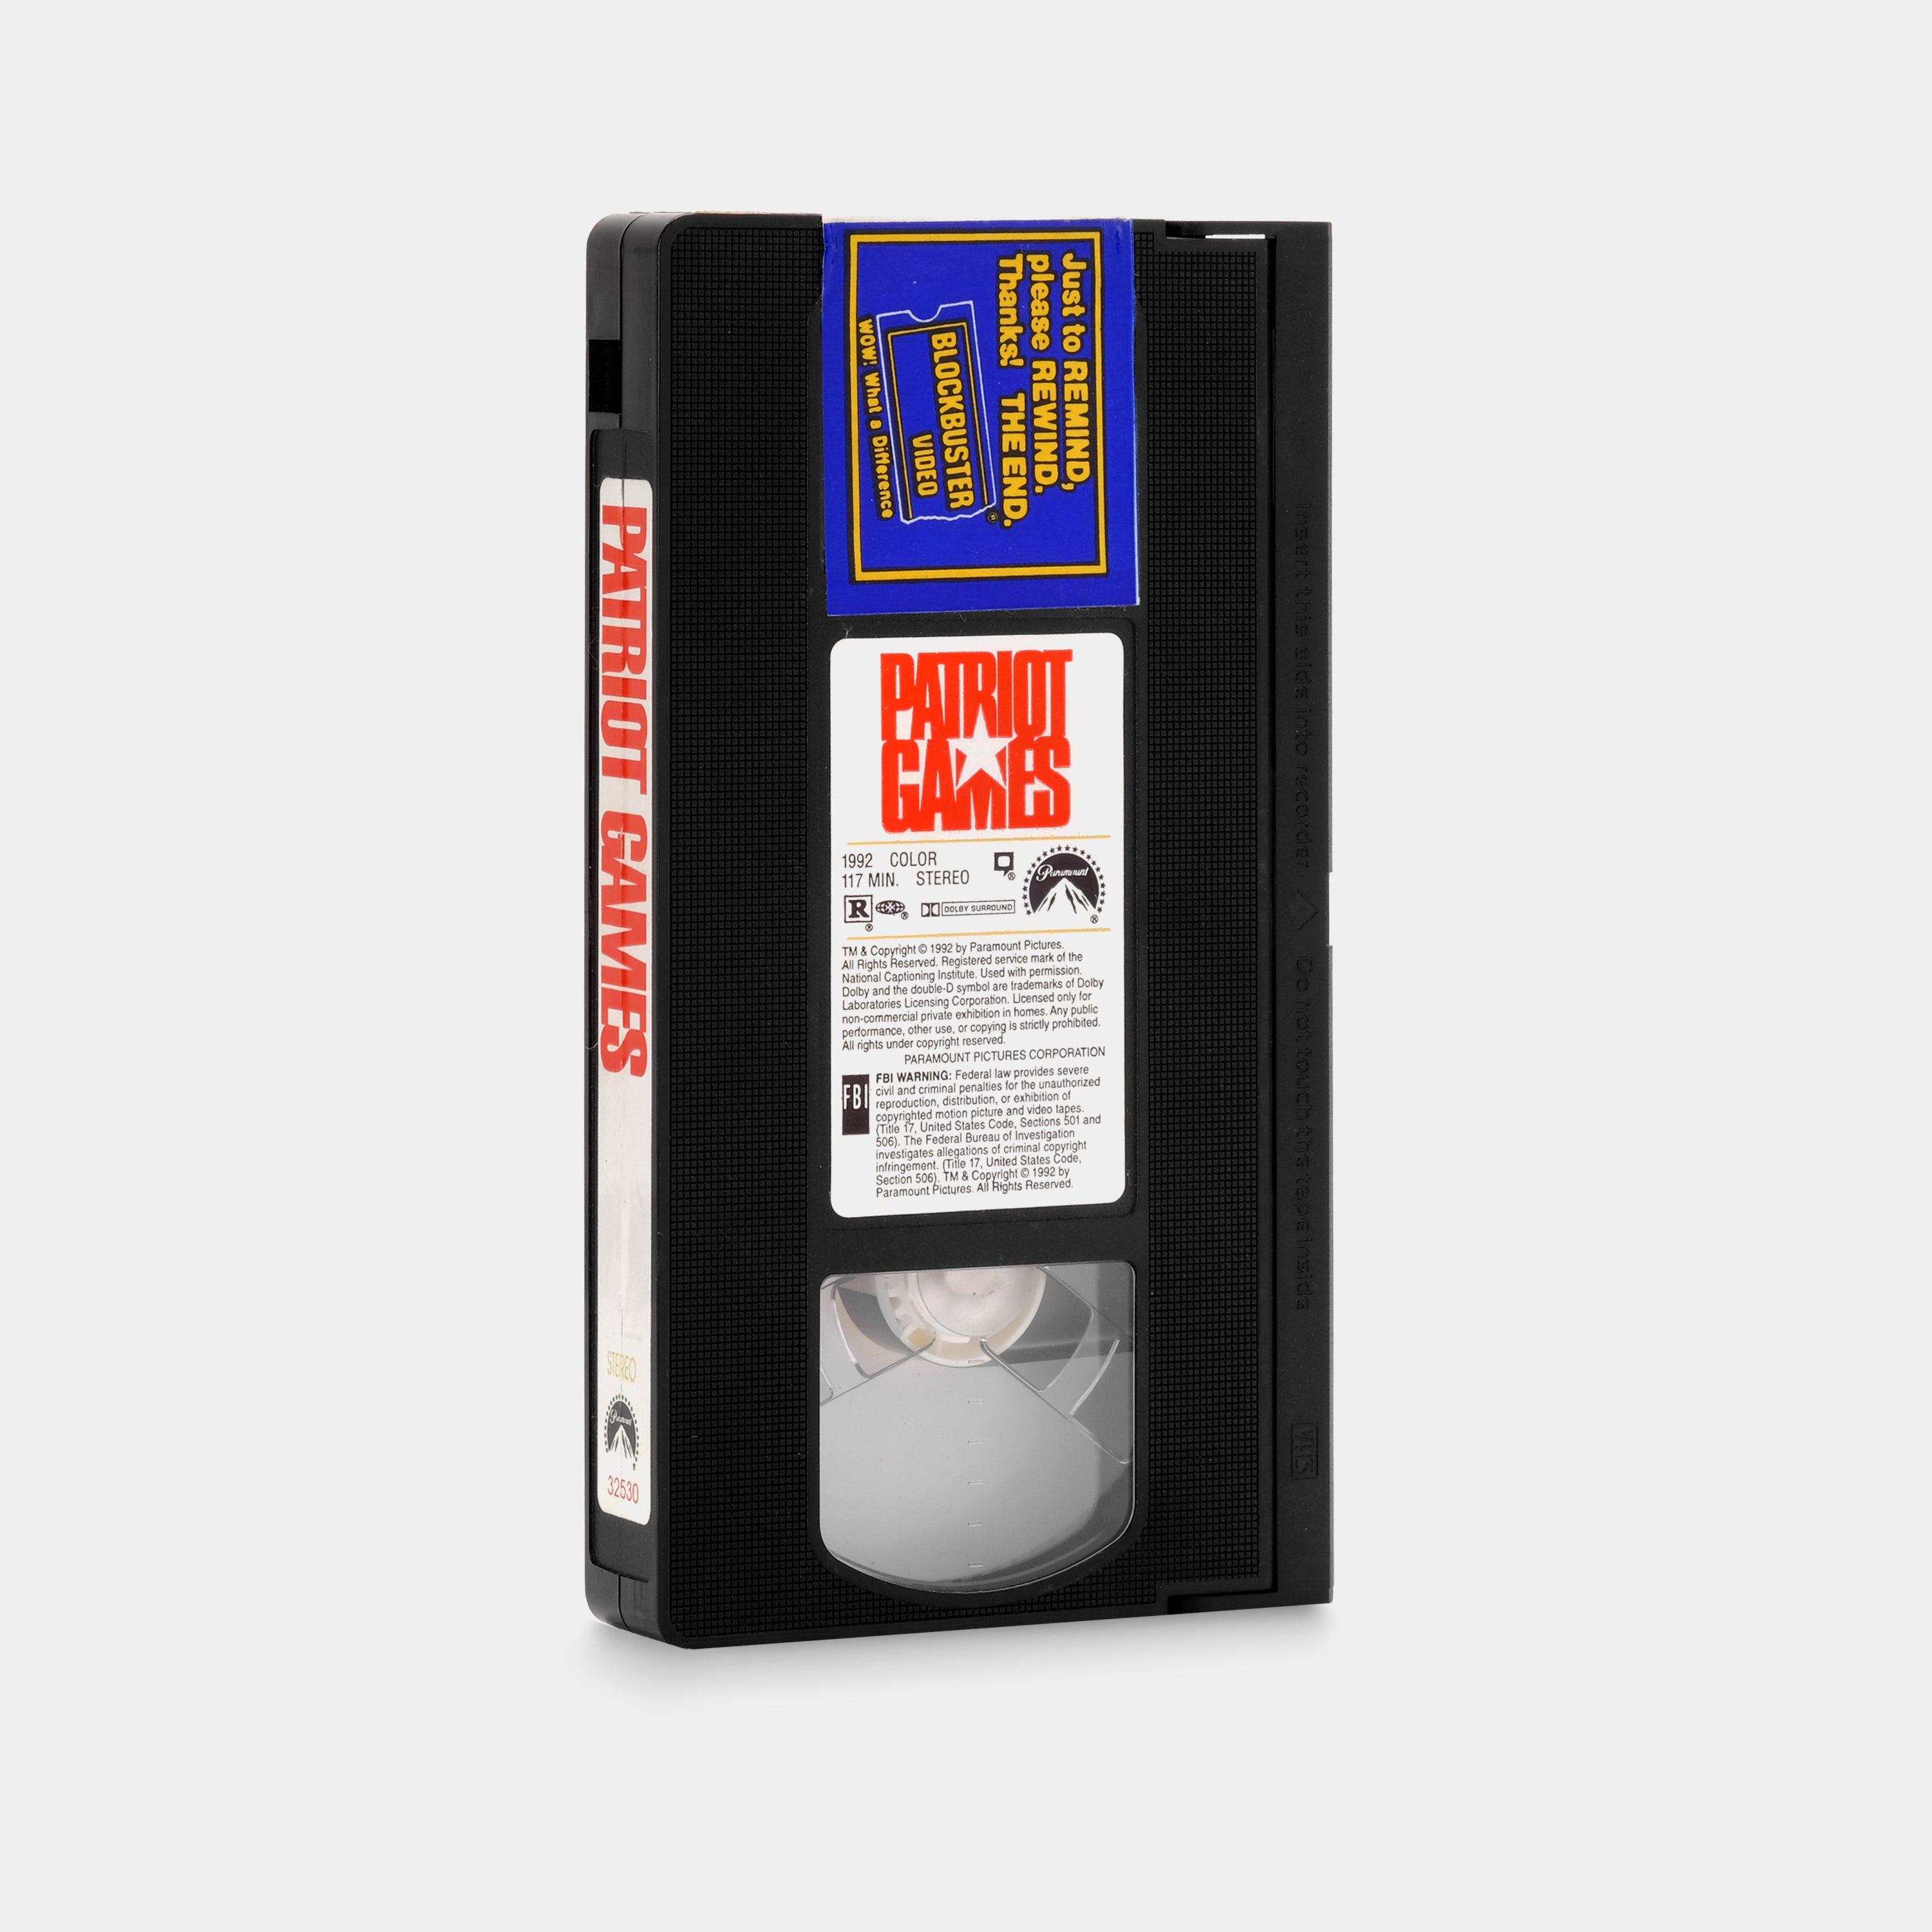 Patriot Games VHS Tape